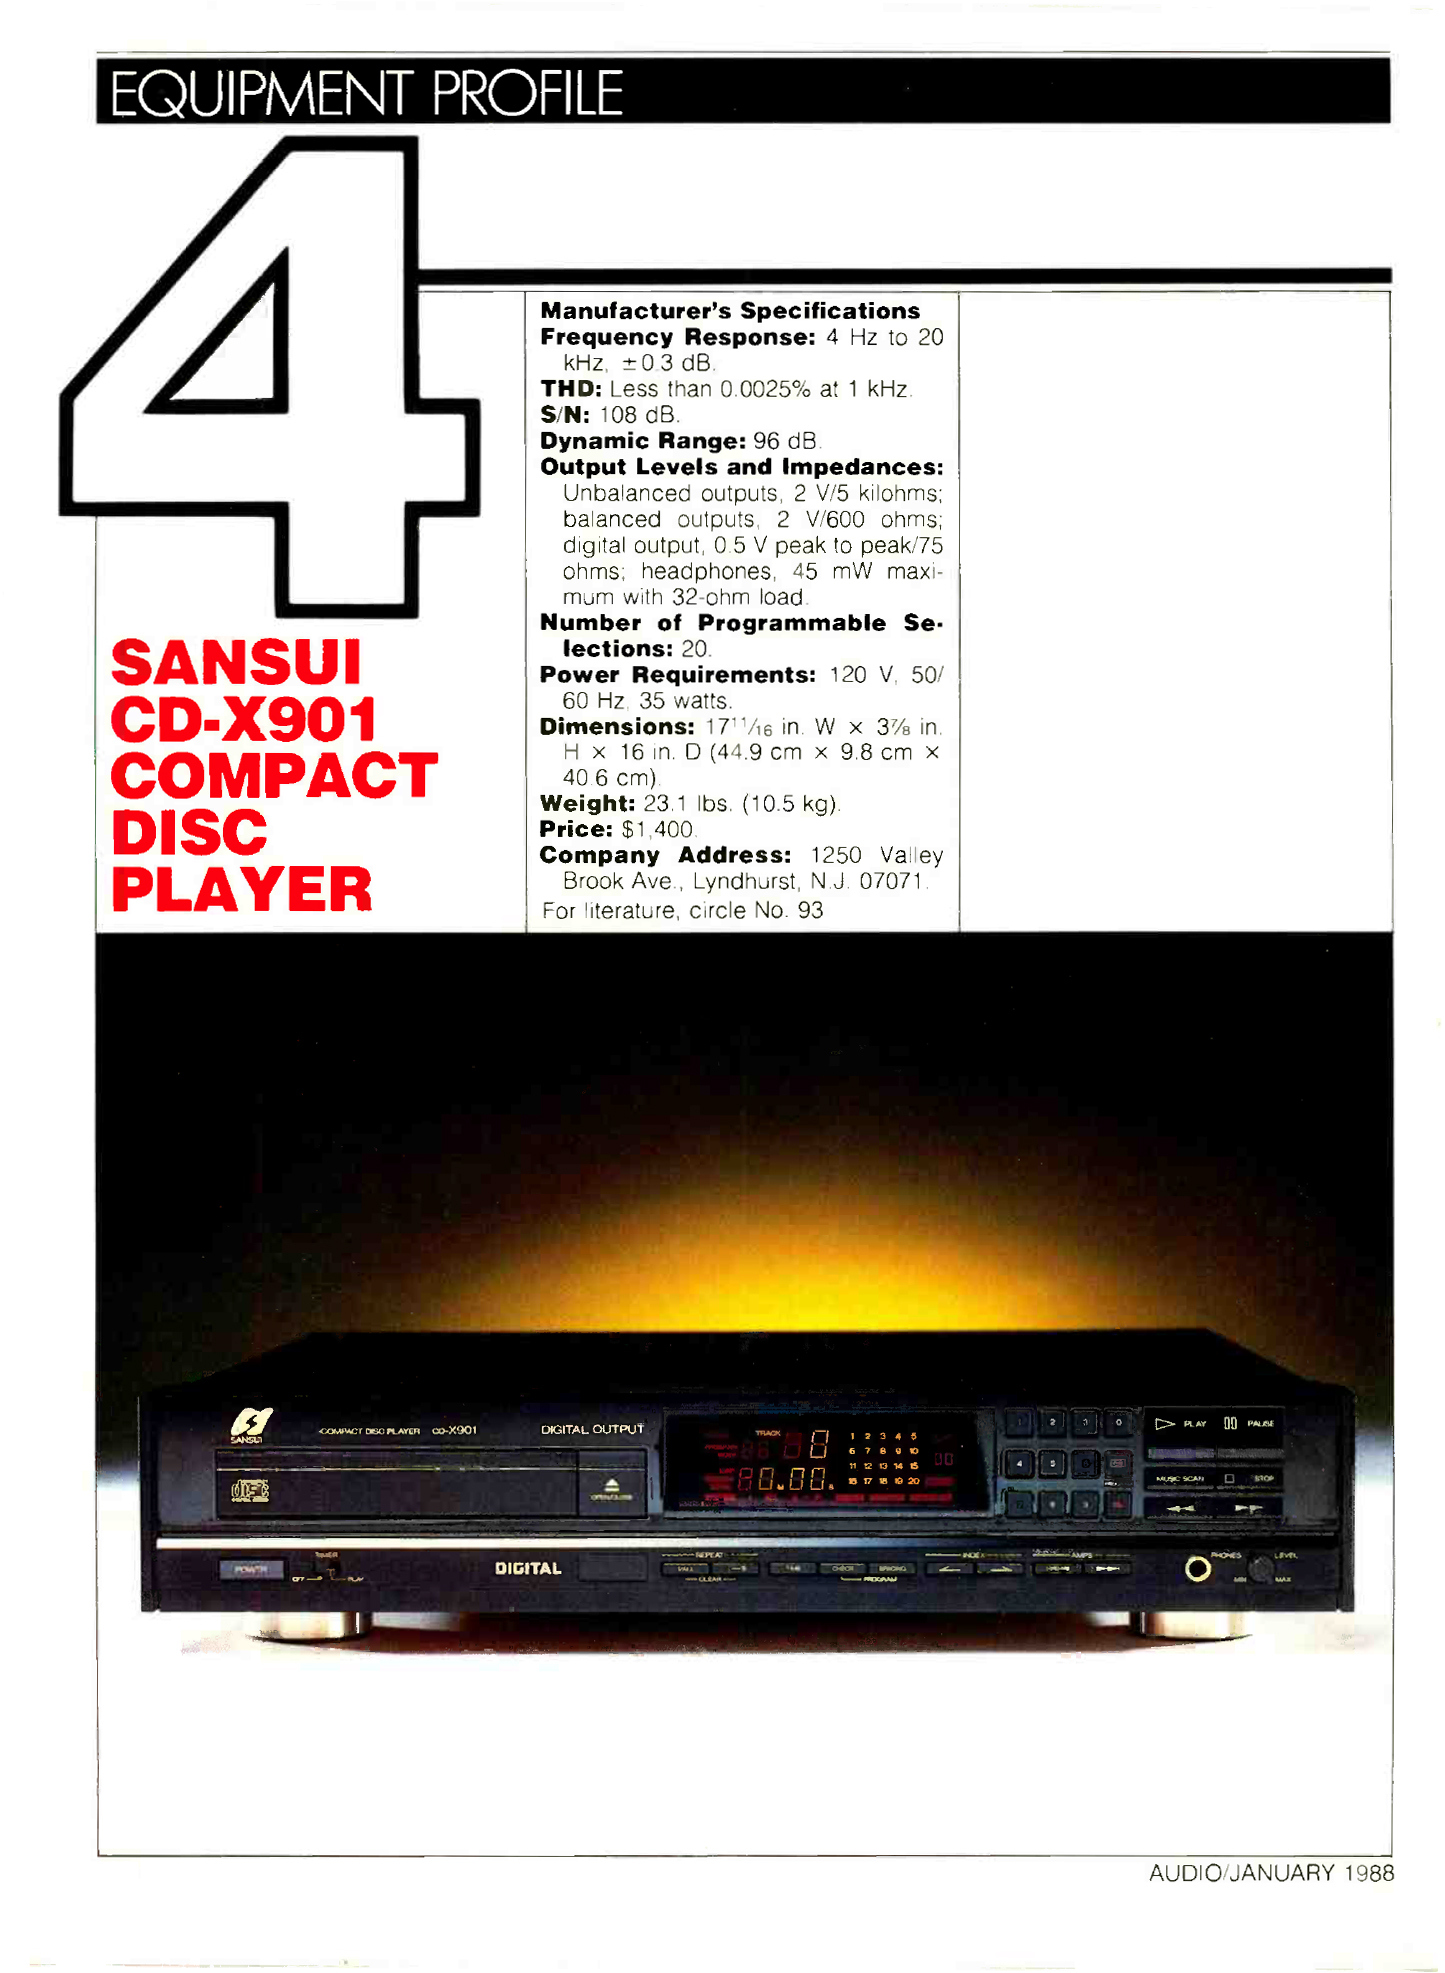 Sansui CD-X 901-Prospekt-1988.jpg